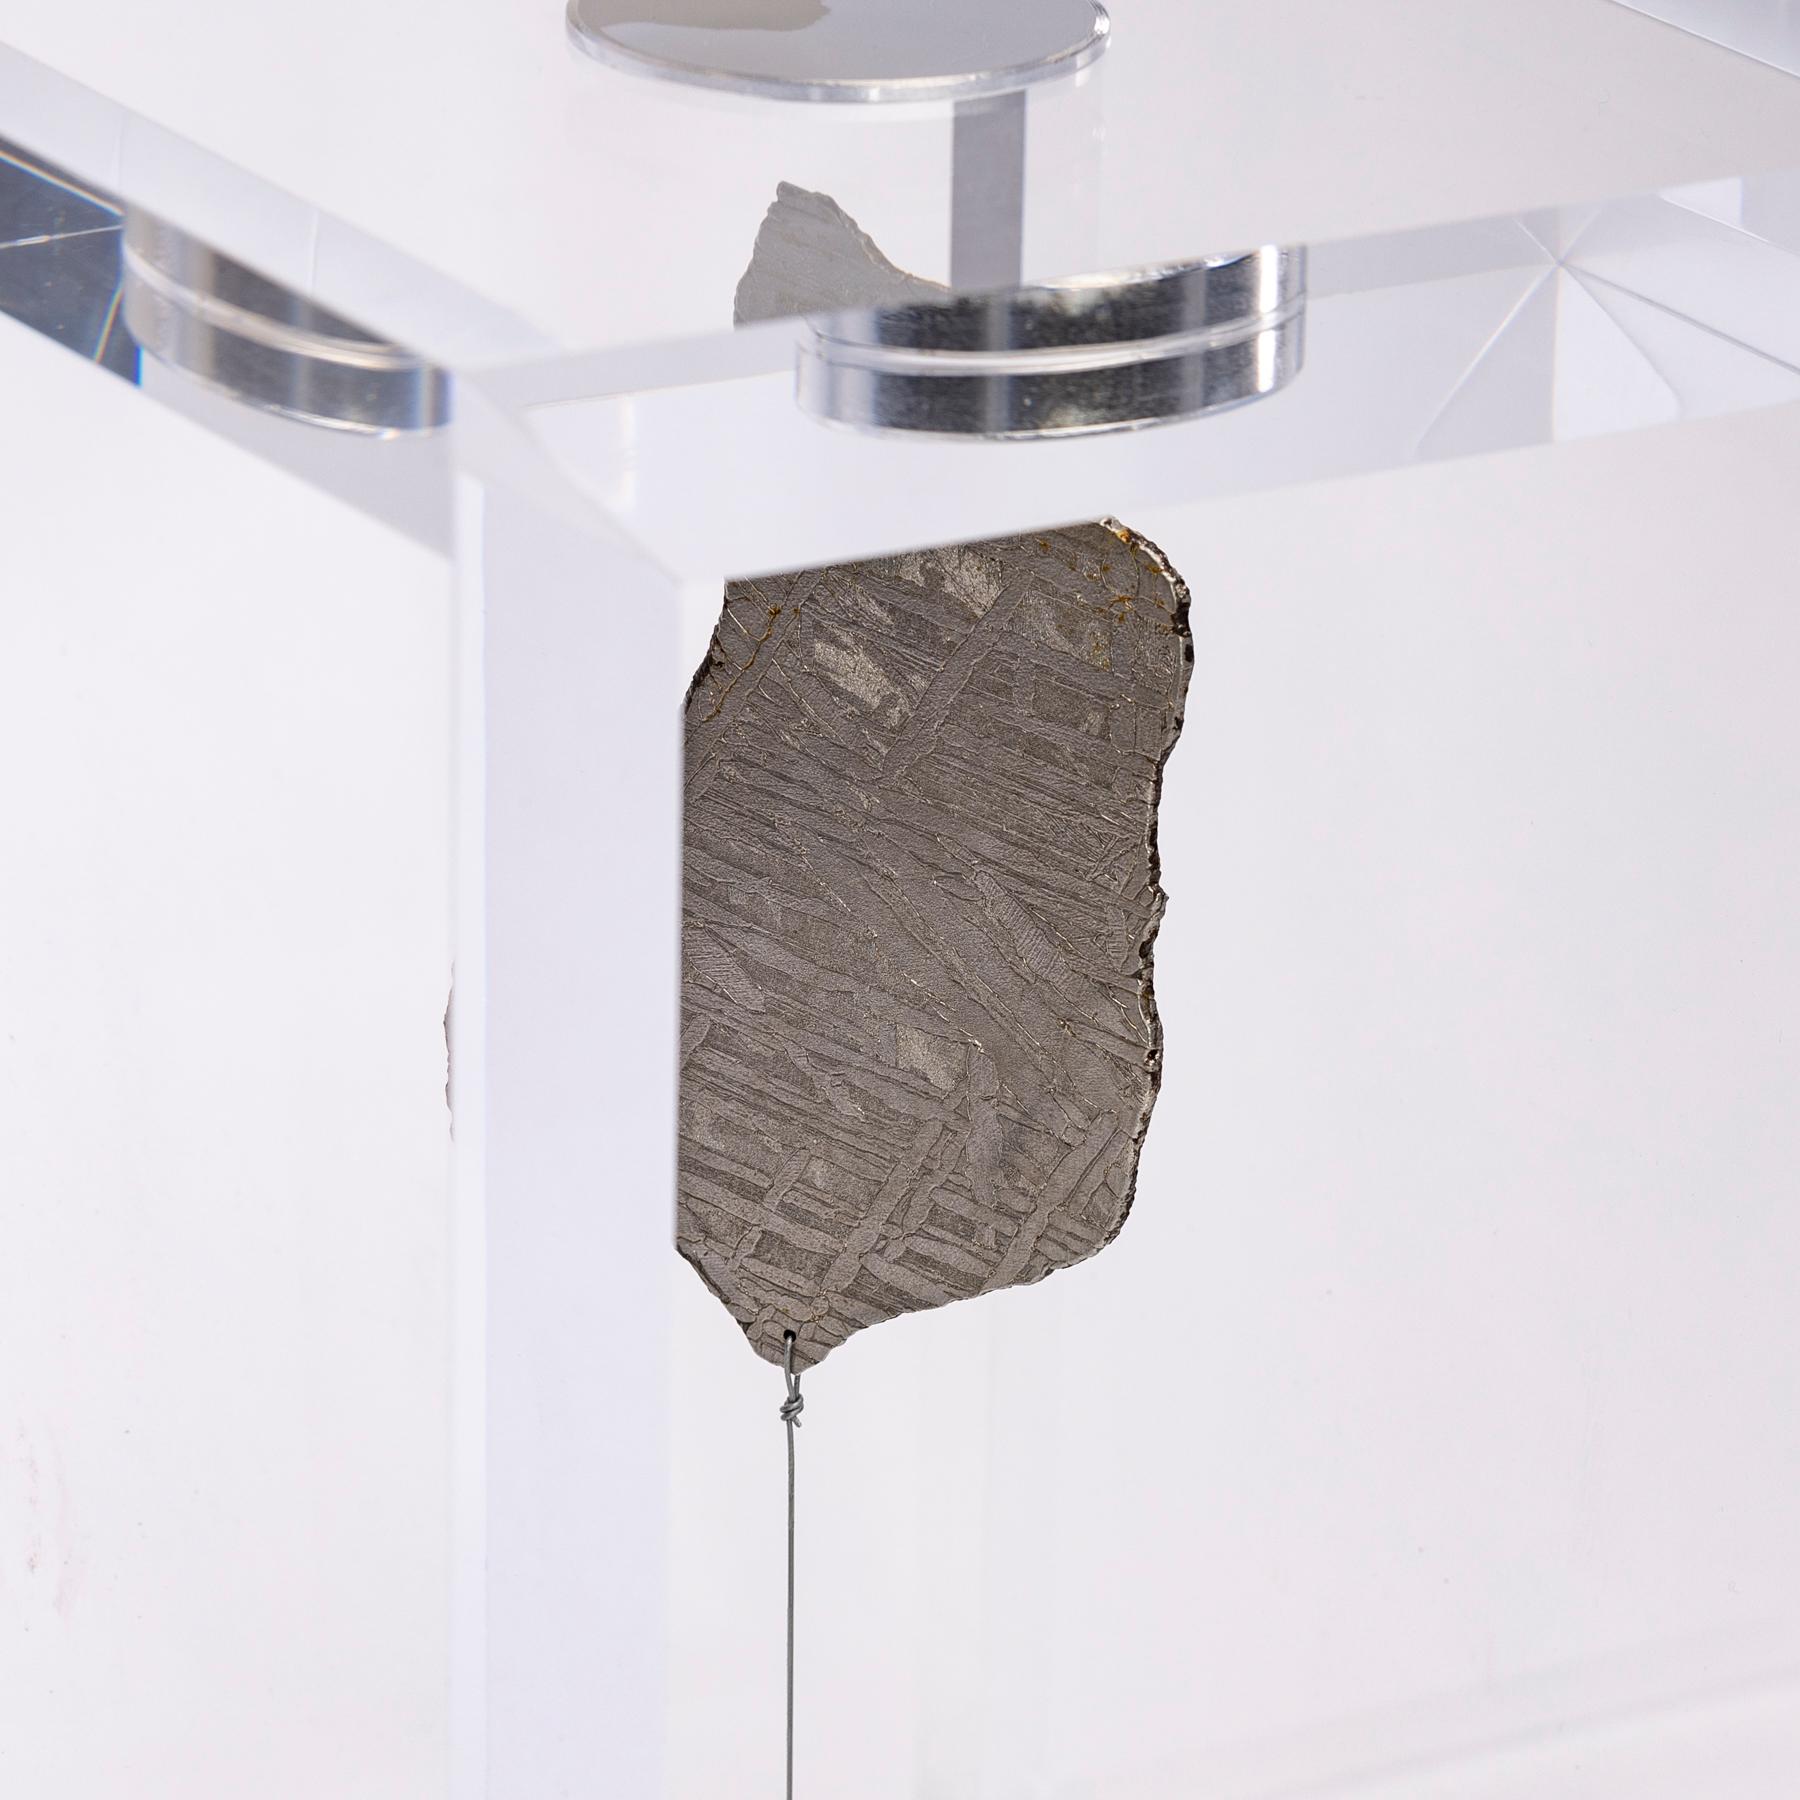 Contemporary Original Design, Space Box, Russian Seymchan Meteorite in Acrylic Box